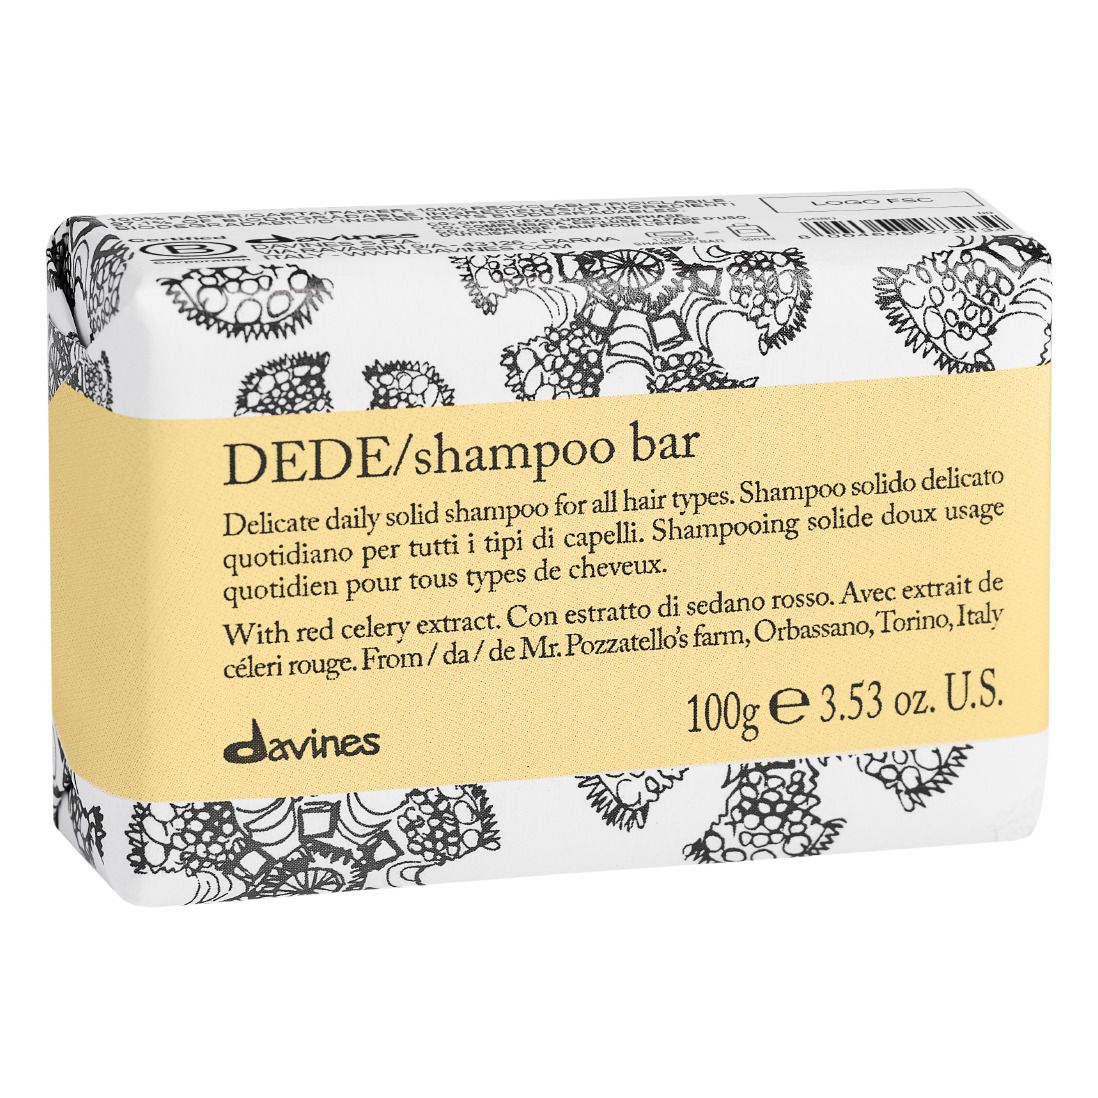 Davines - Shampoing solide doux usage quotidien Dede -100g - Blanc